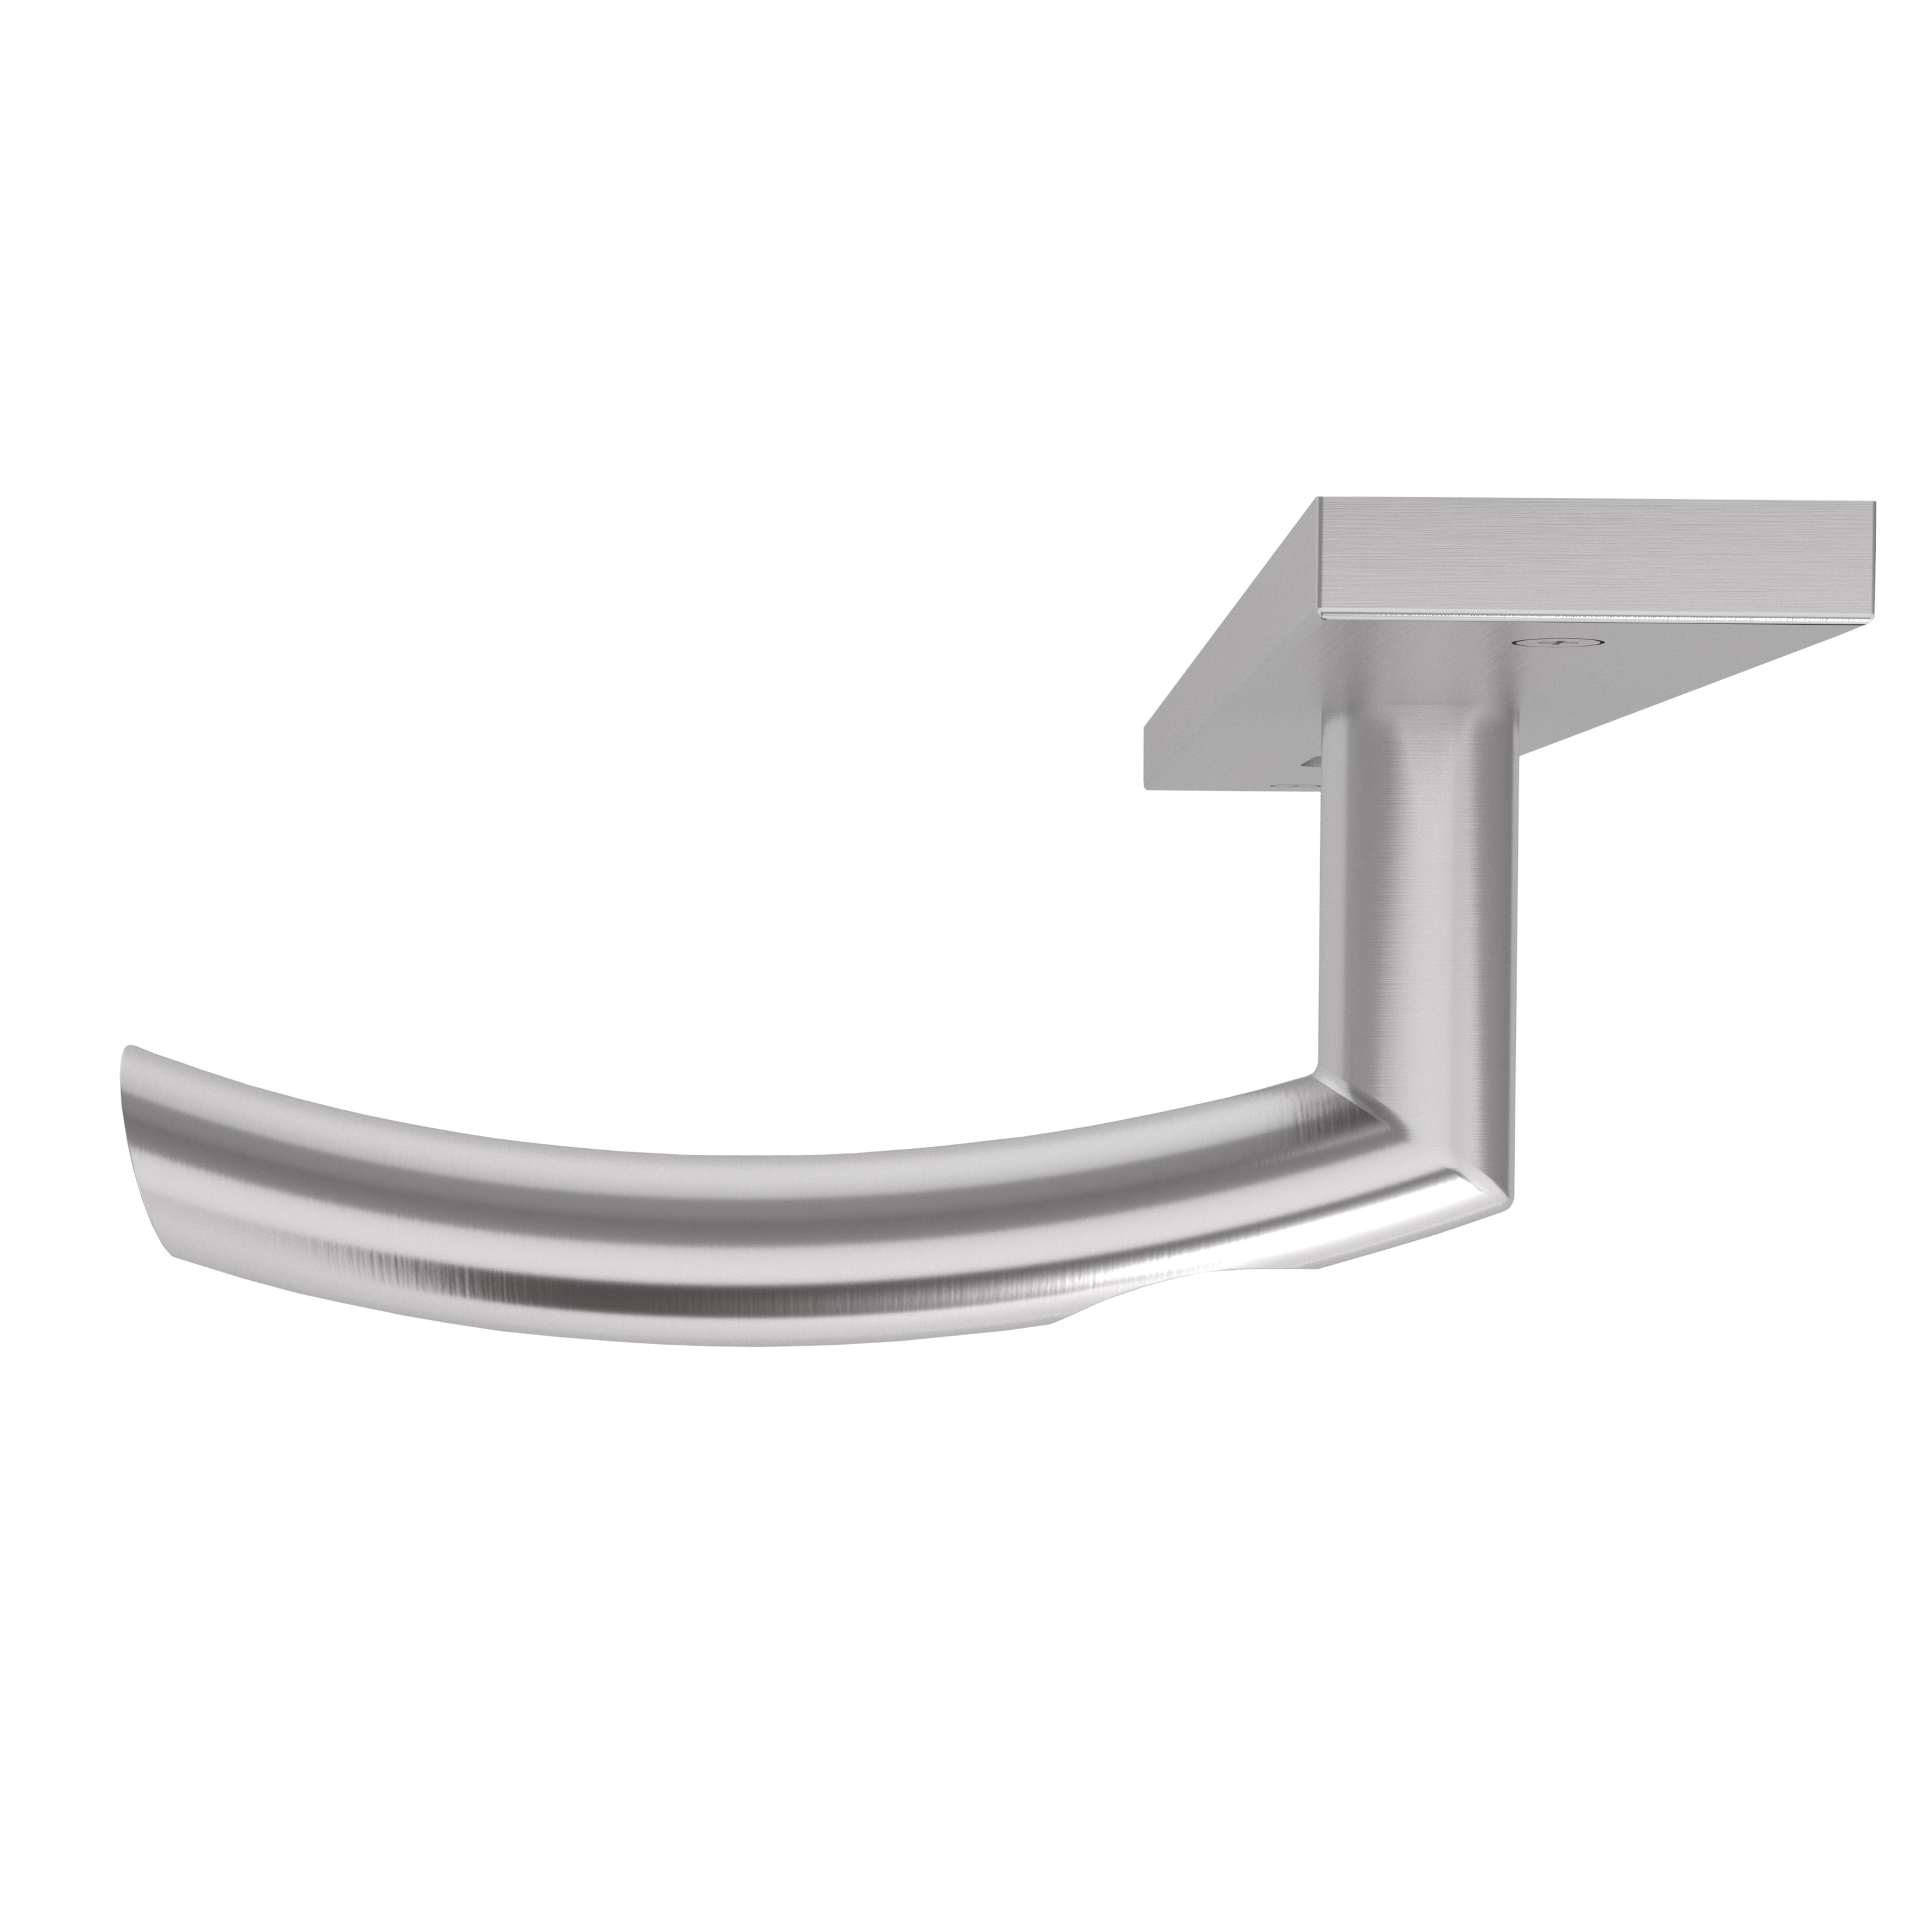 Langschildgarnitur eckig L-Form gebogen Modell Iloria Edelstahl geschraubt Klasse 1